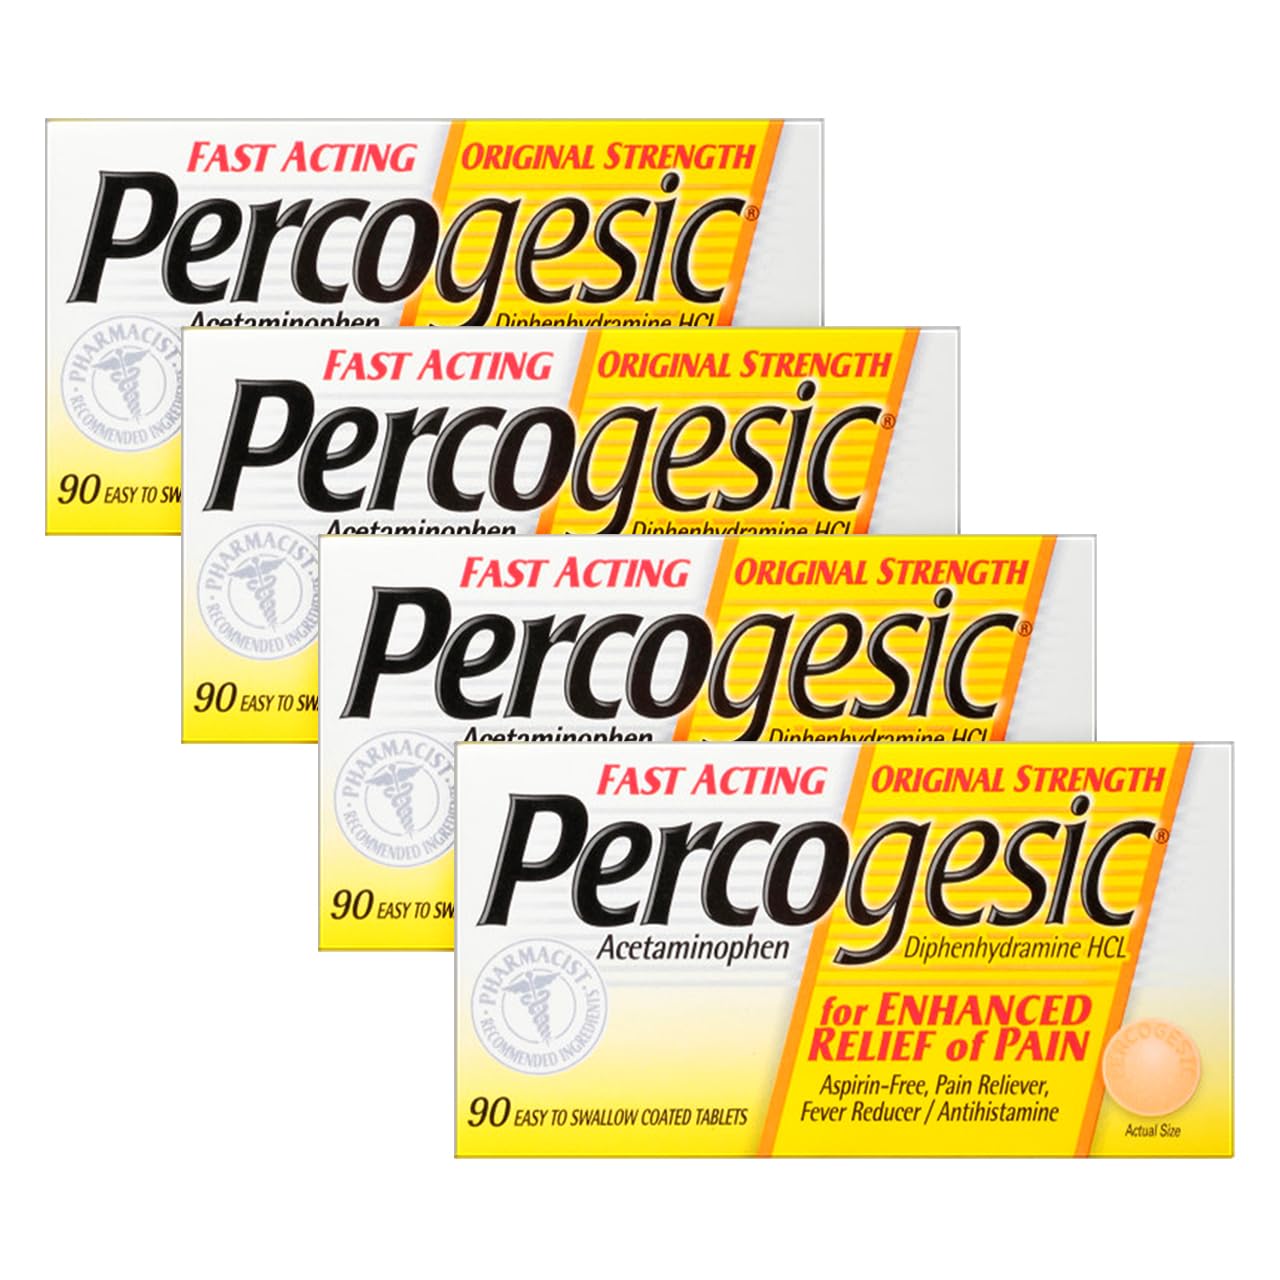 Percogesic Original Pain Relief | Aspirin Free Fast Acting Relief | 90